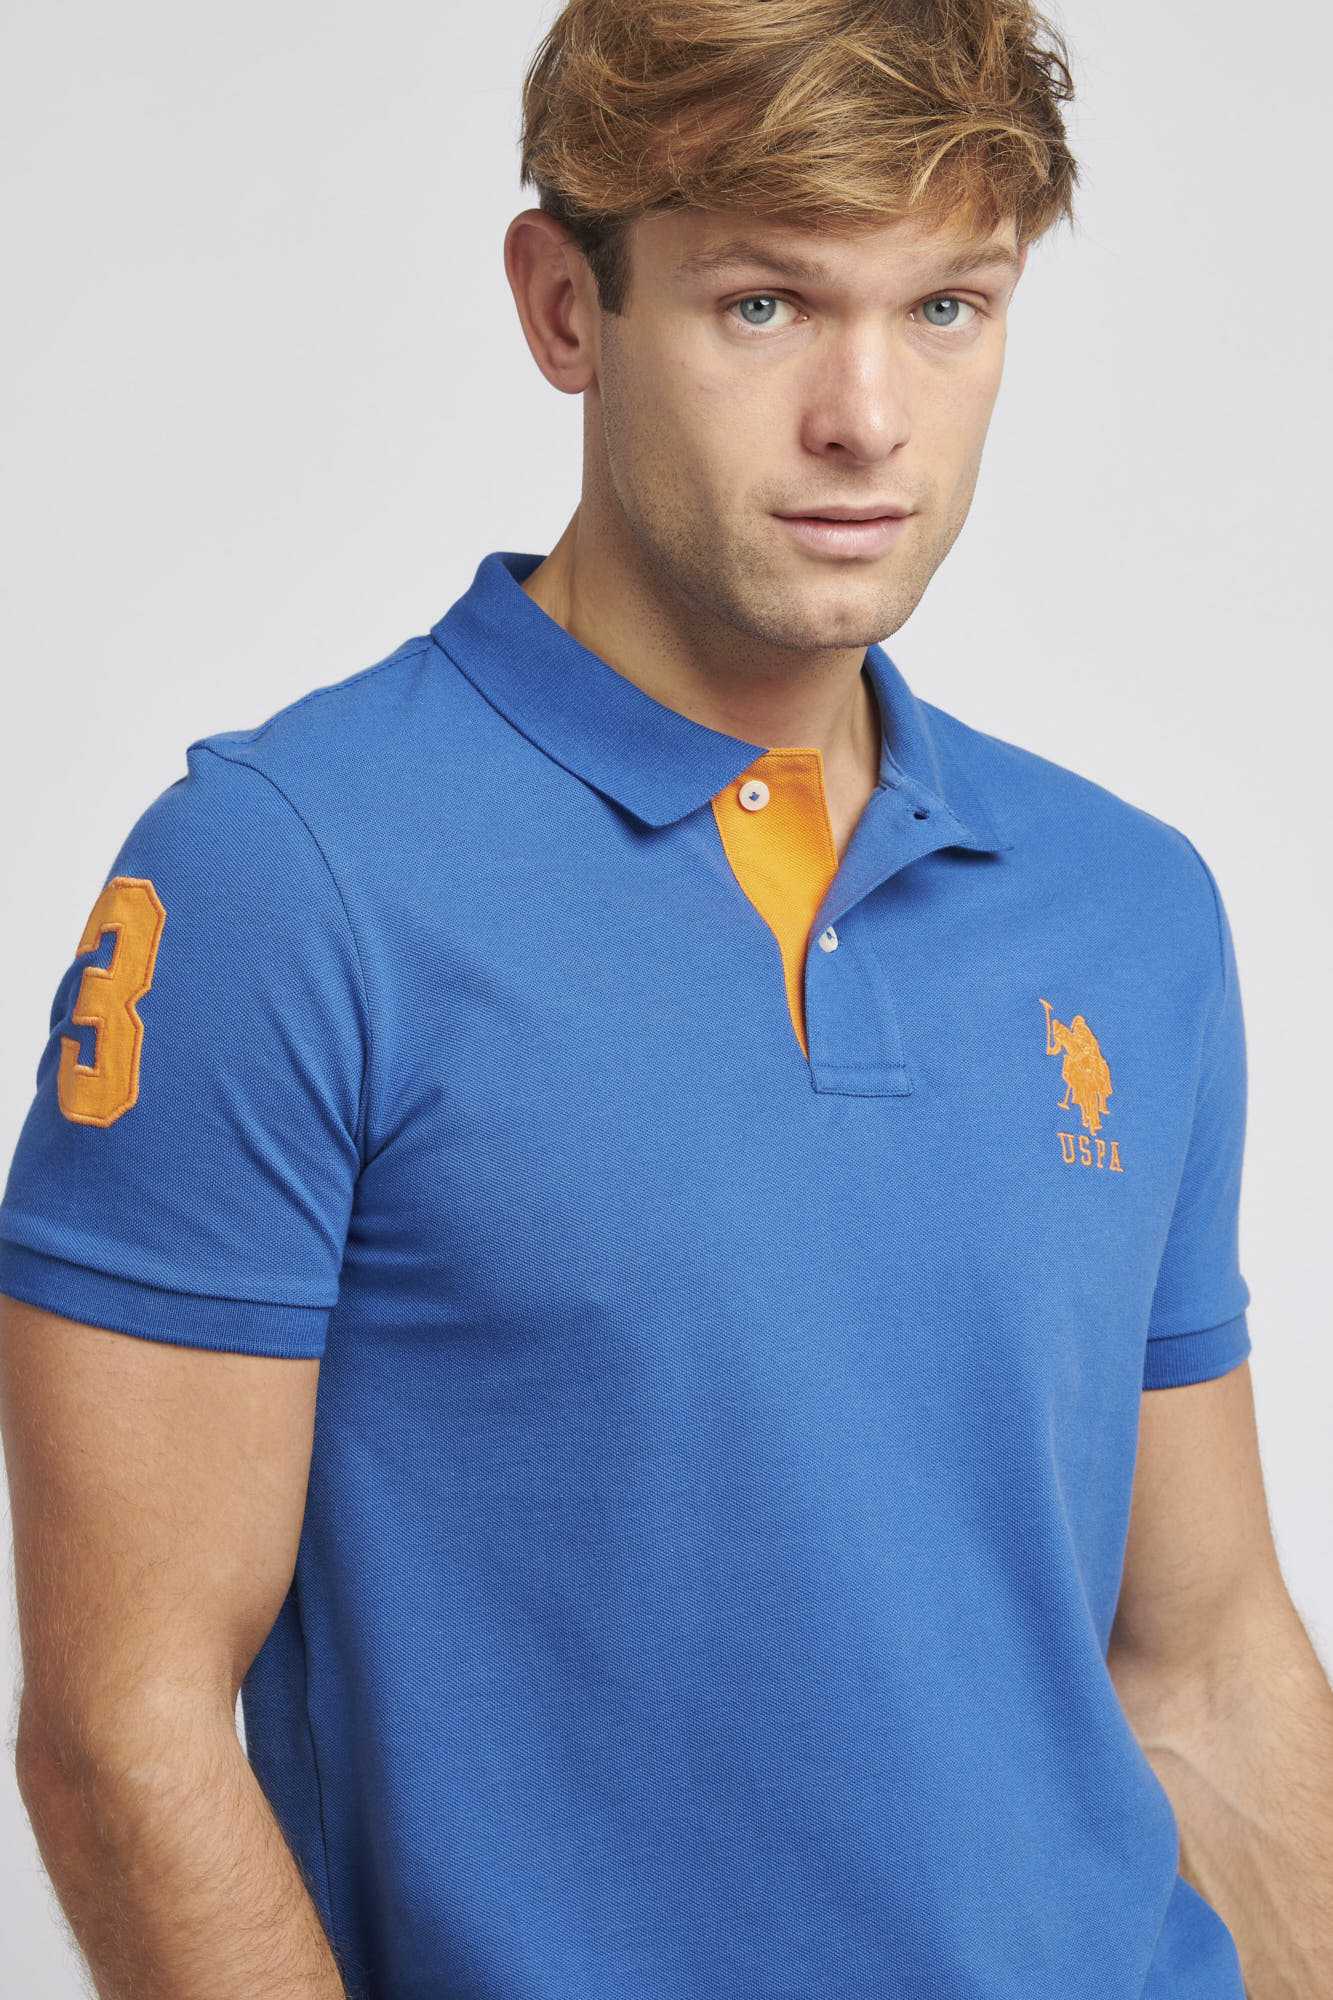 Mens Player 3 Pique Polo Shirt in Deja Vu Blue